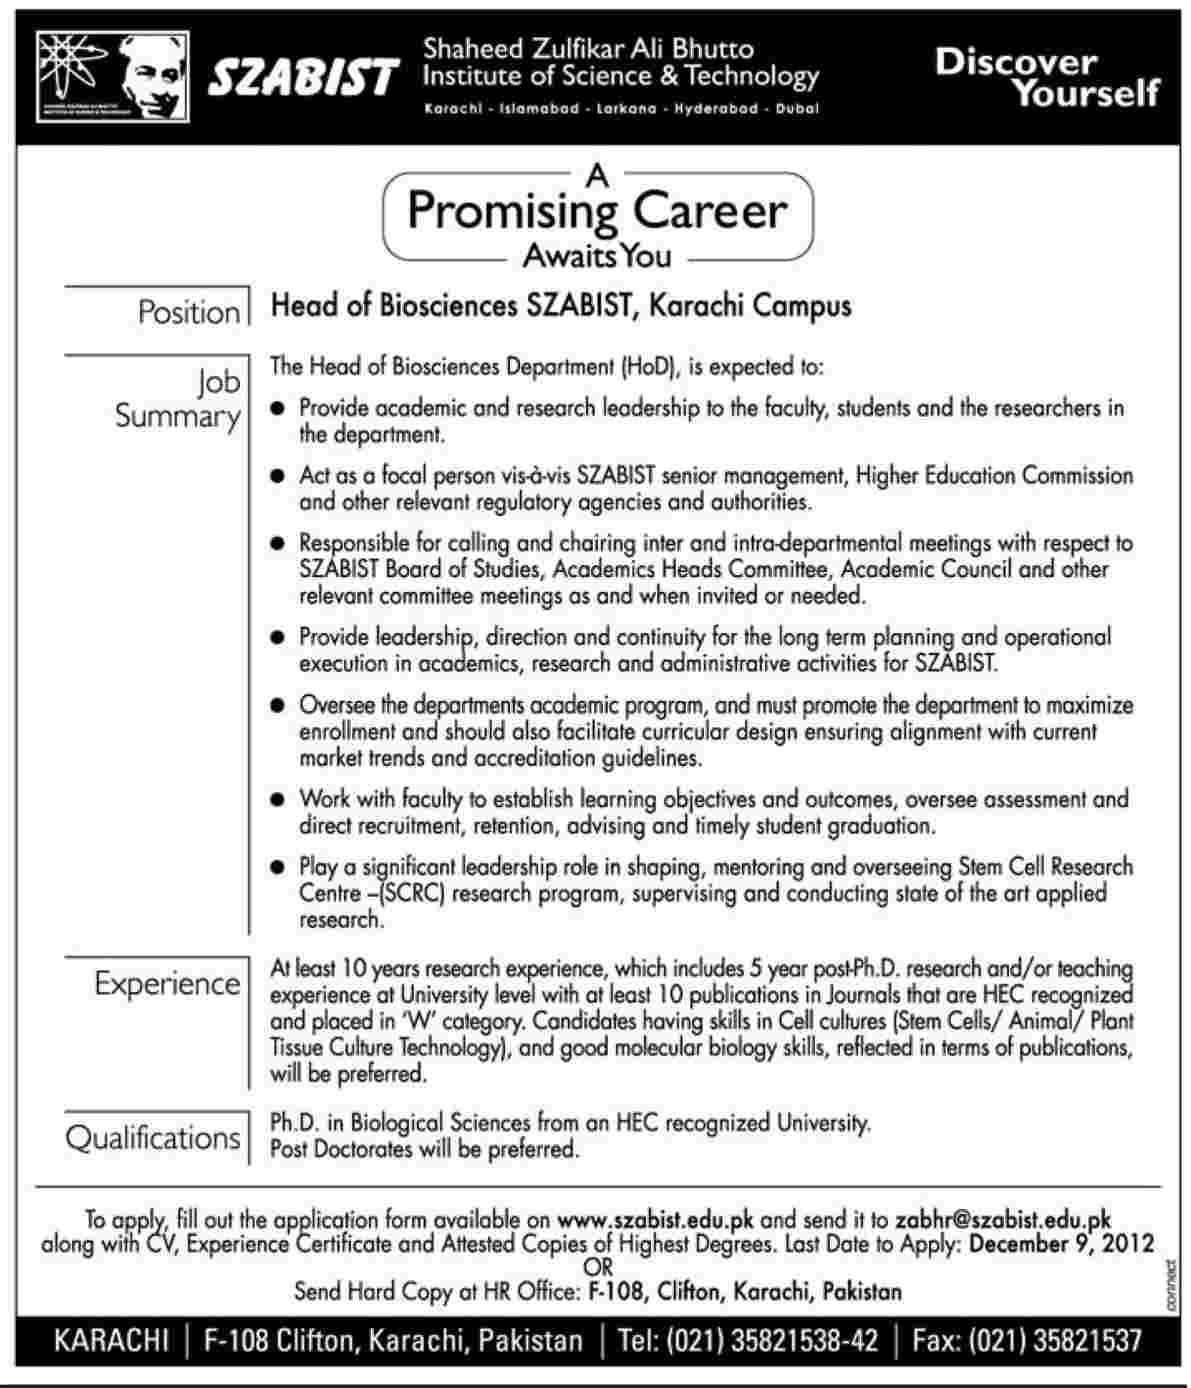 SZABIST Karachi Campus Job 2012 for Head of Biosciences